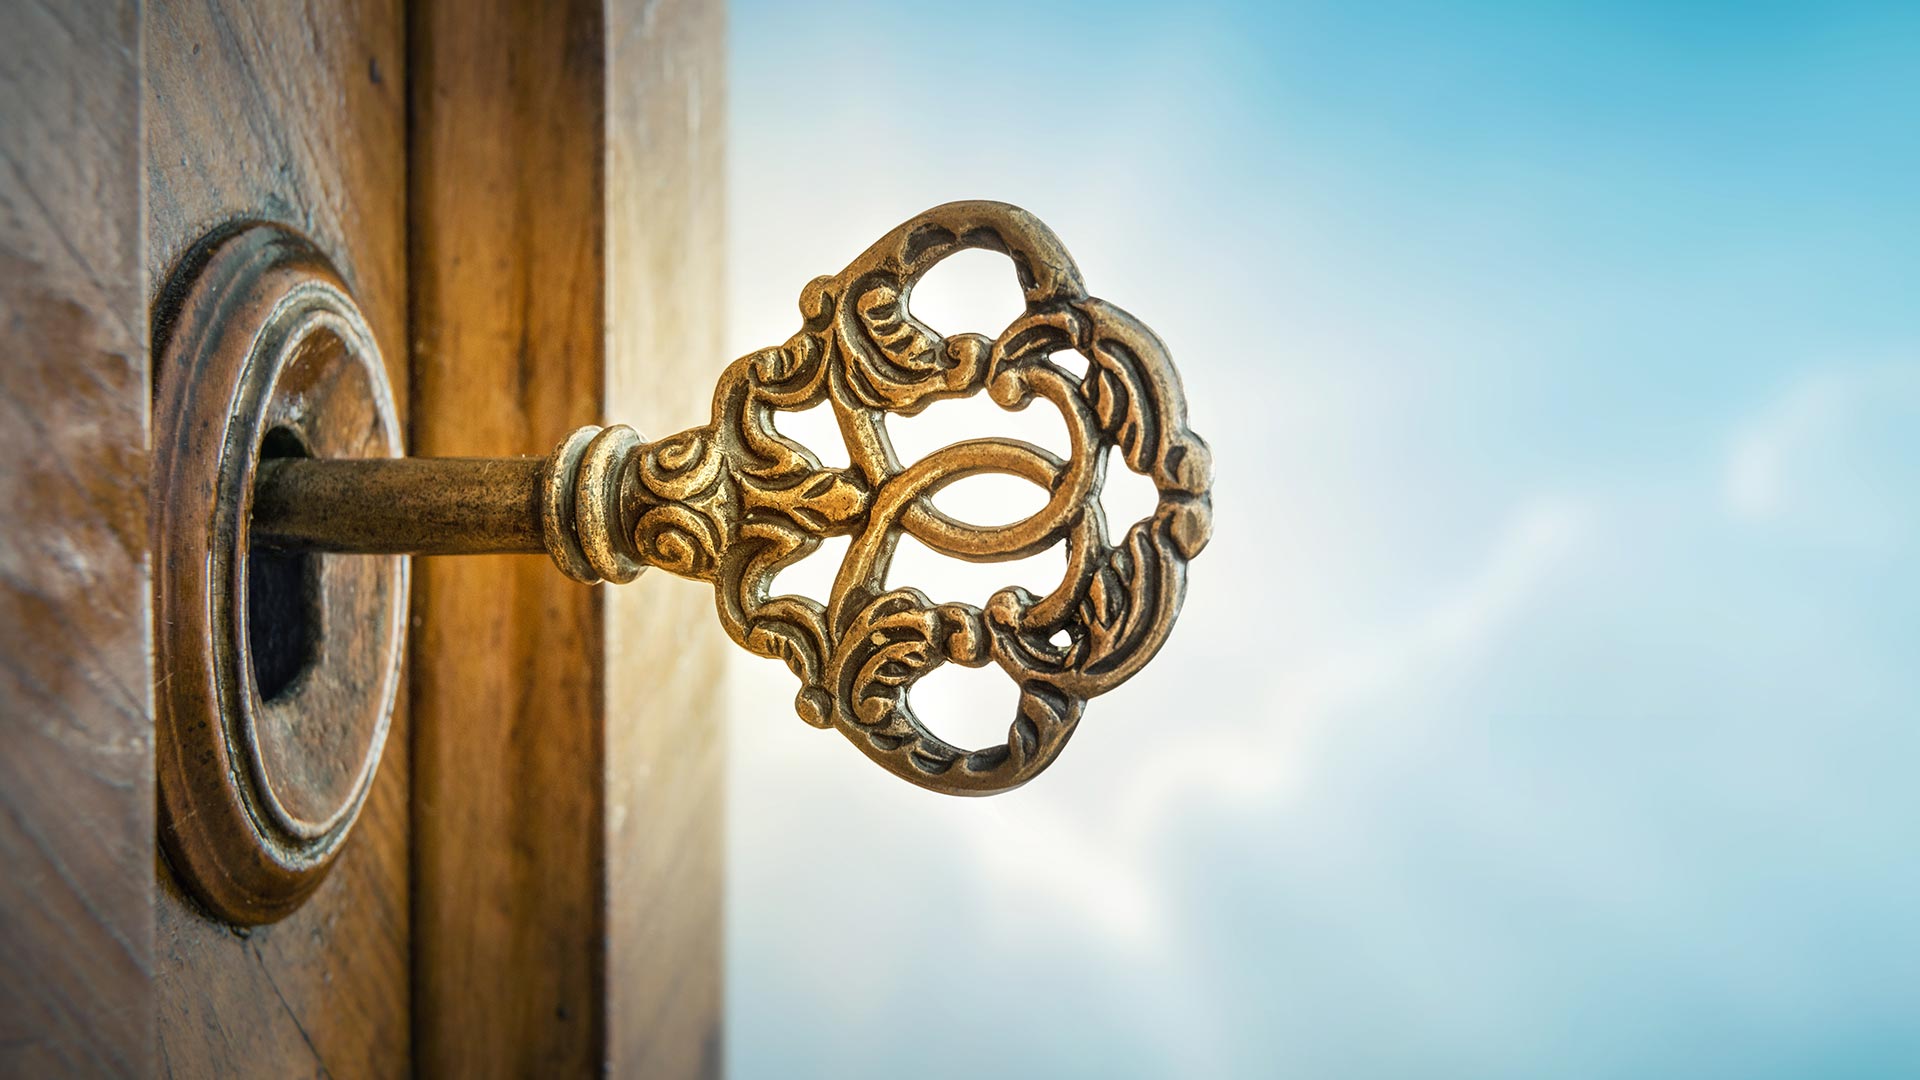 Old fashioned key in a door lock